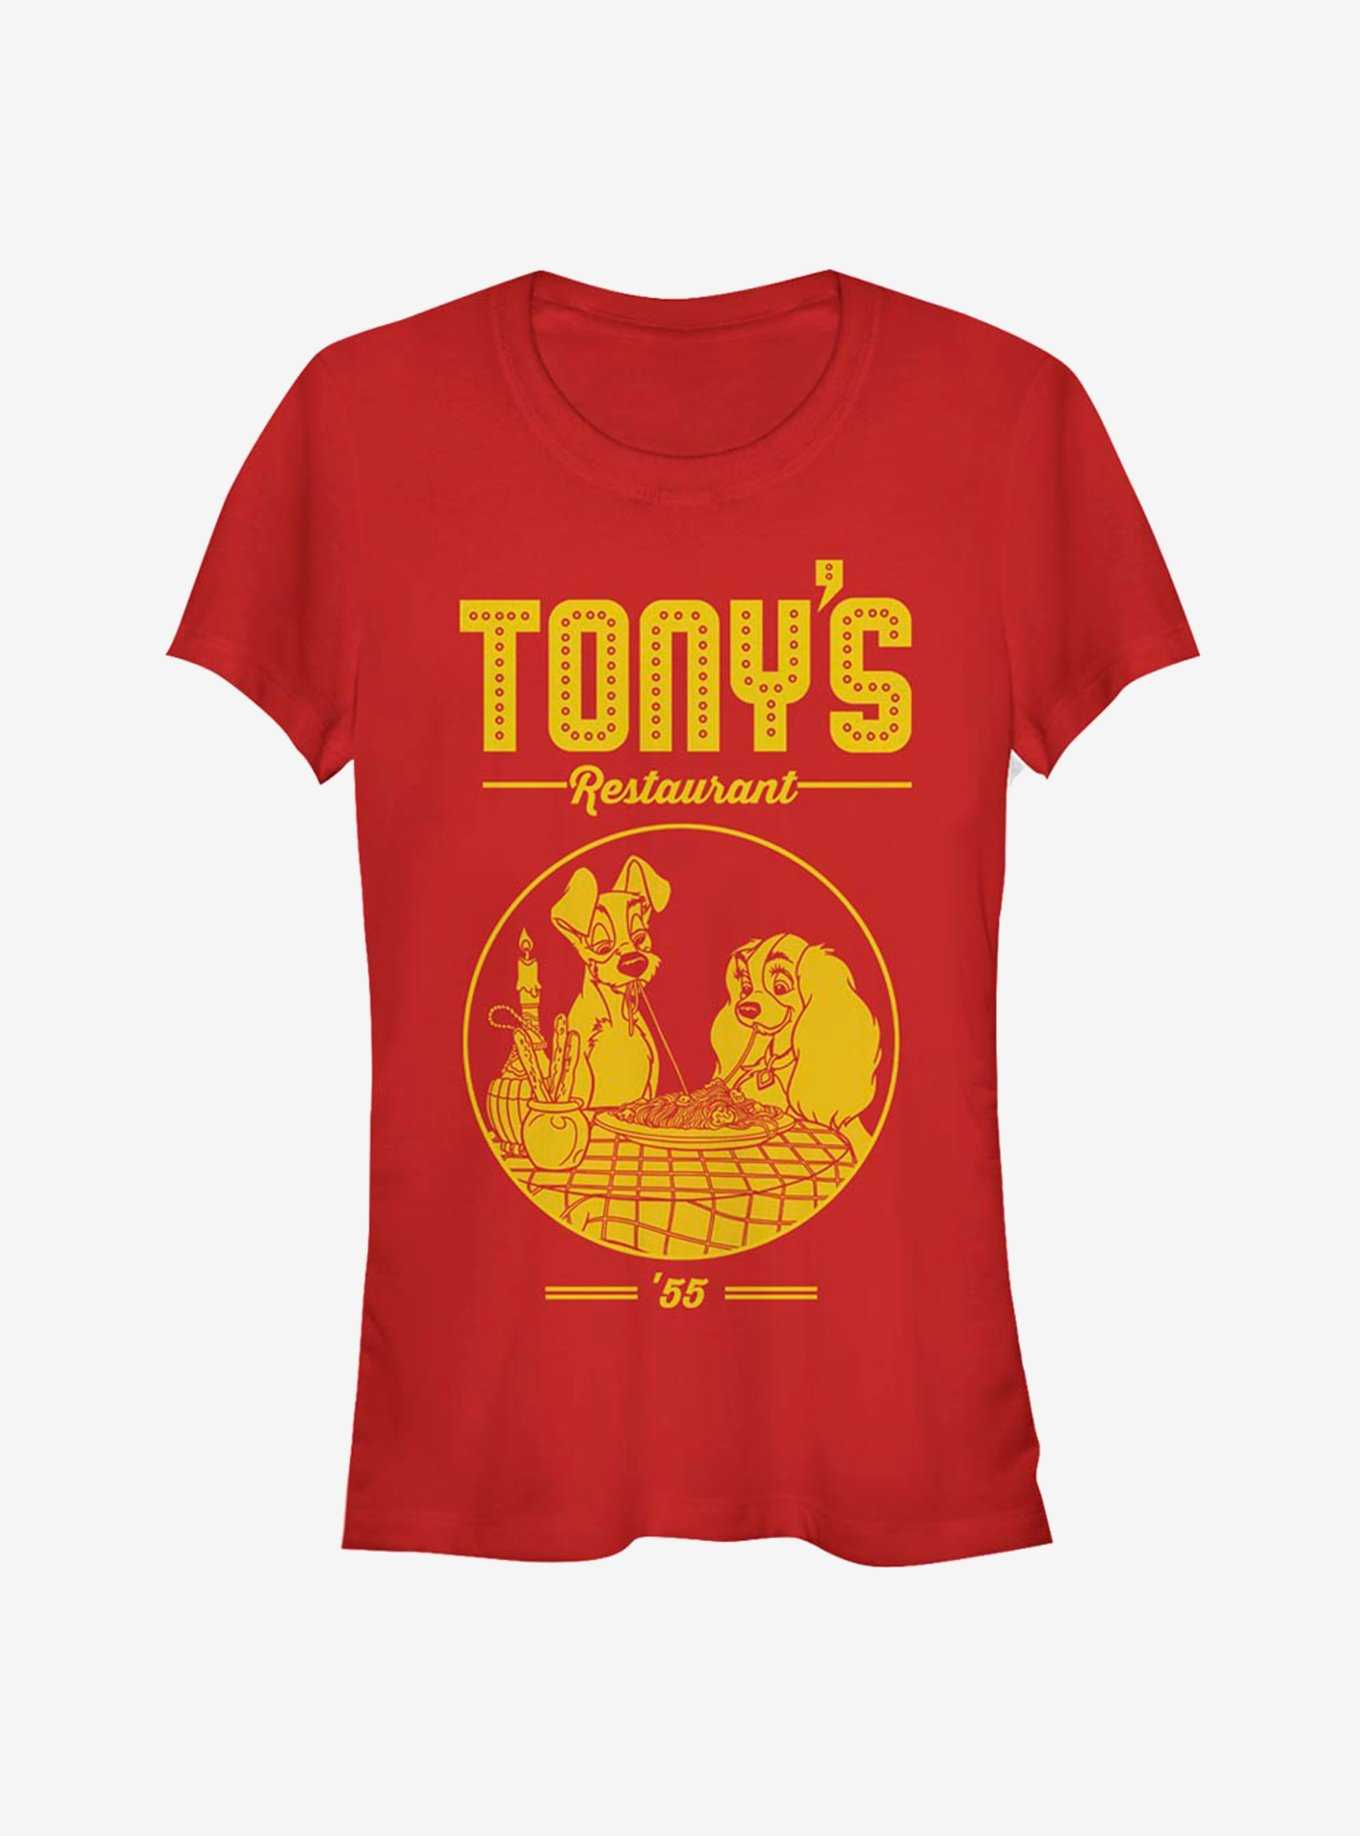 Disney Lady And The Tramp Tony's Restaurant Classic Girls T-Shirt, , hi-res